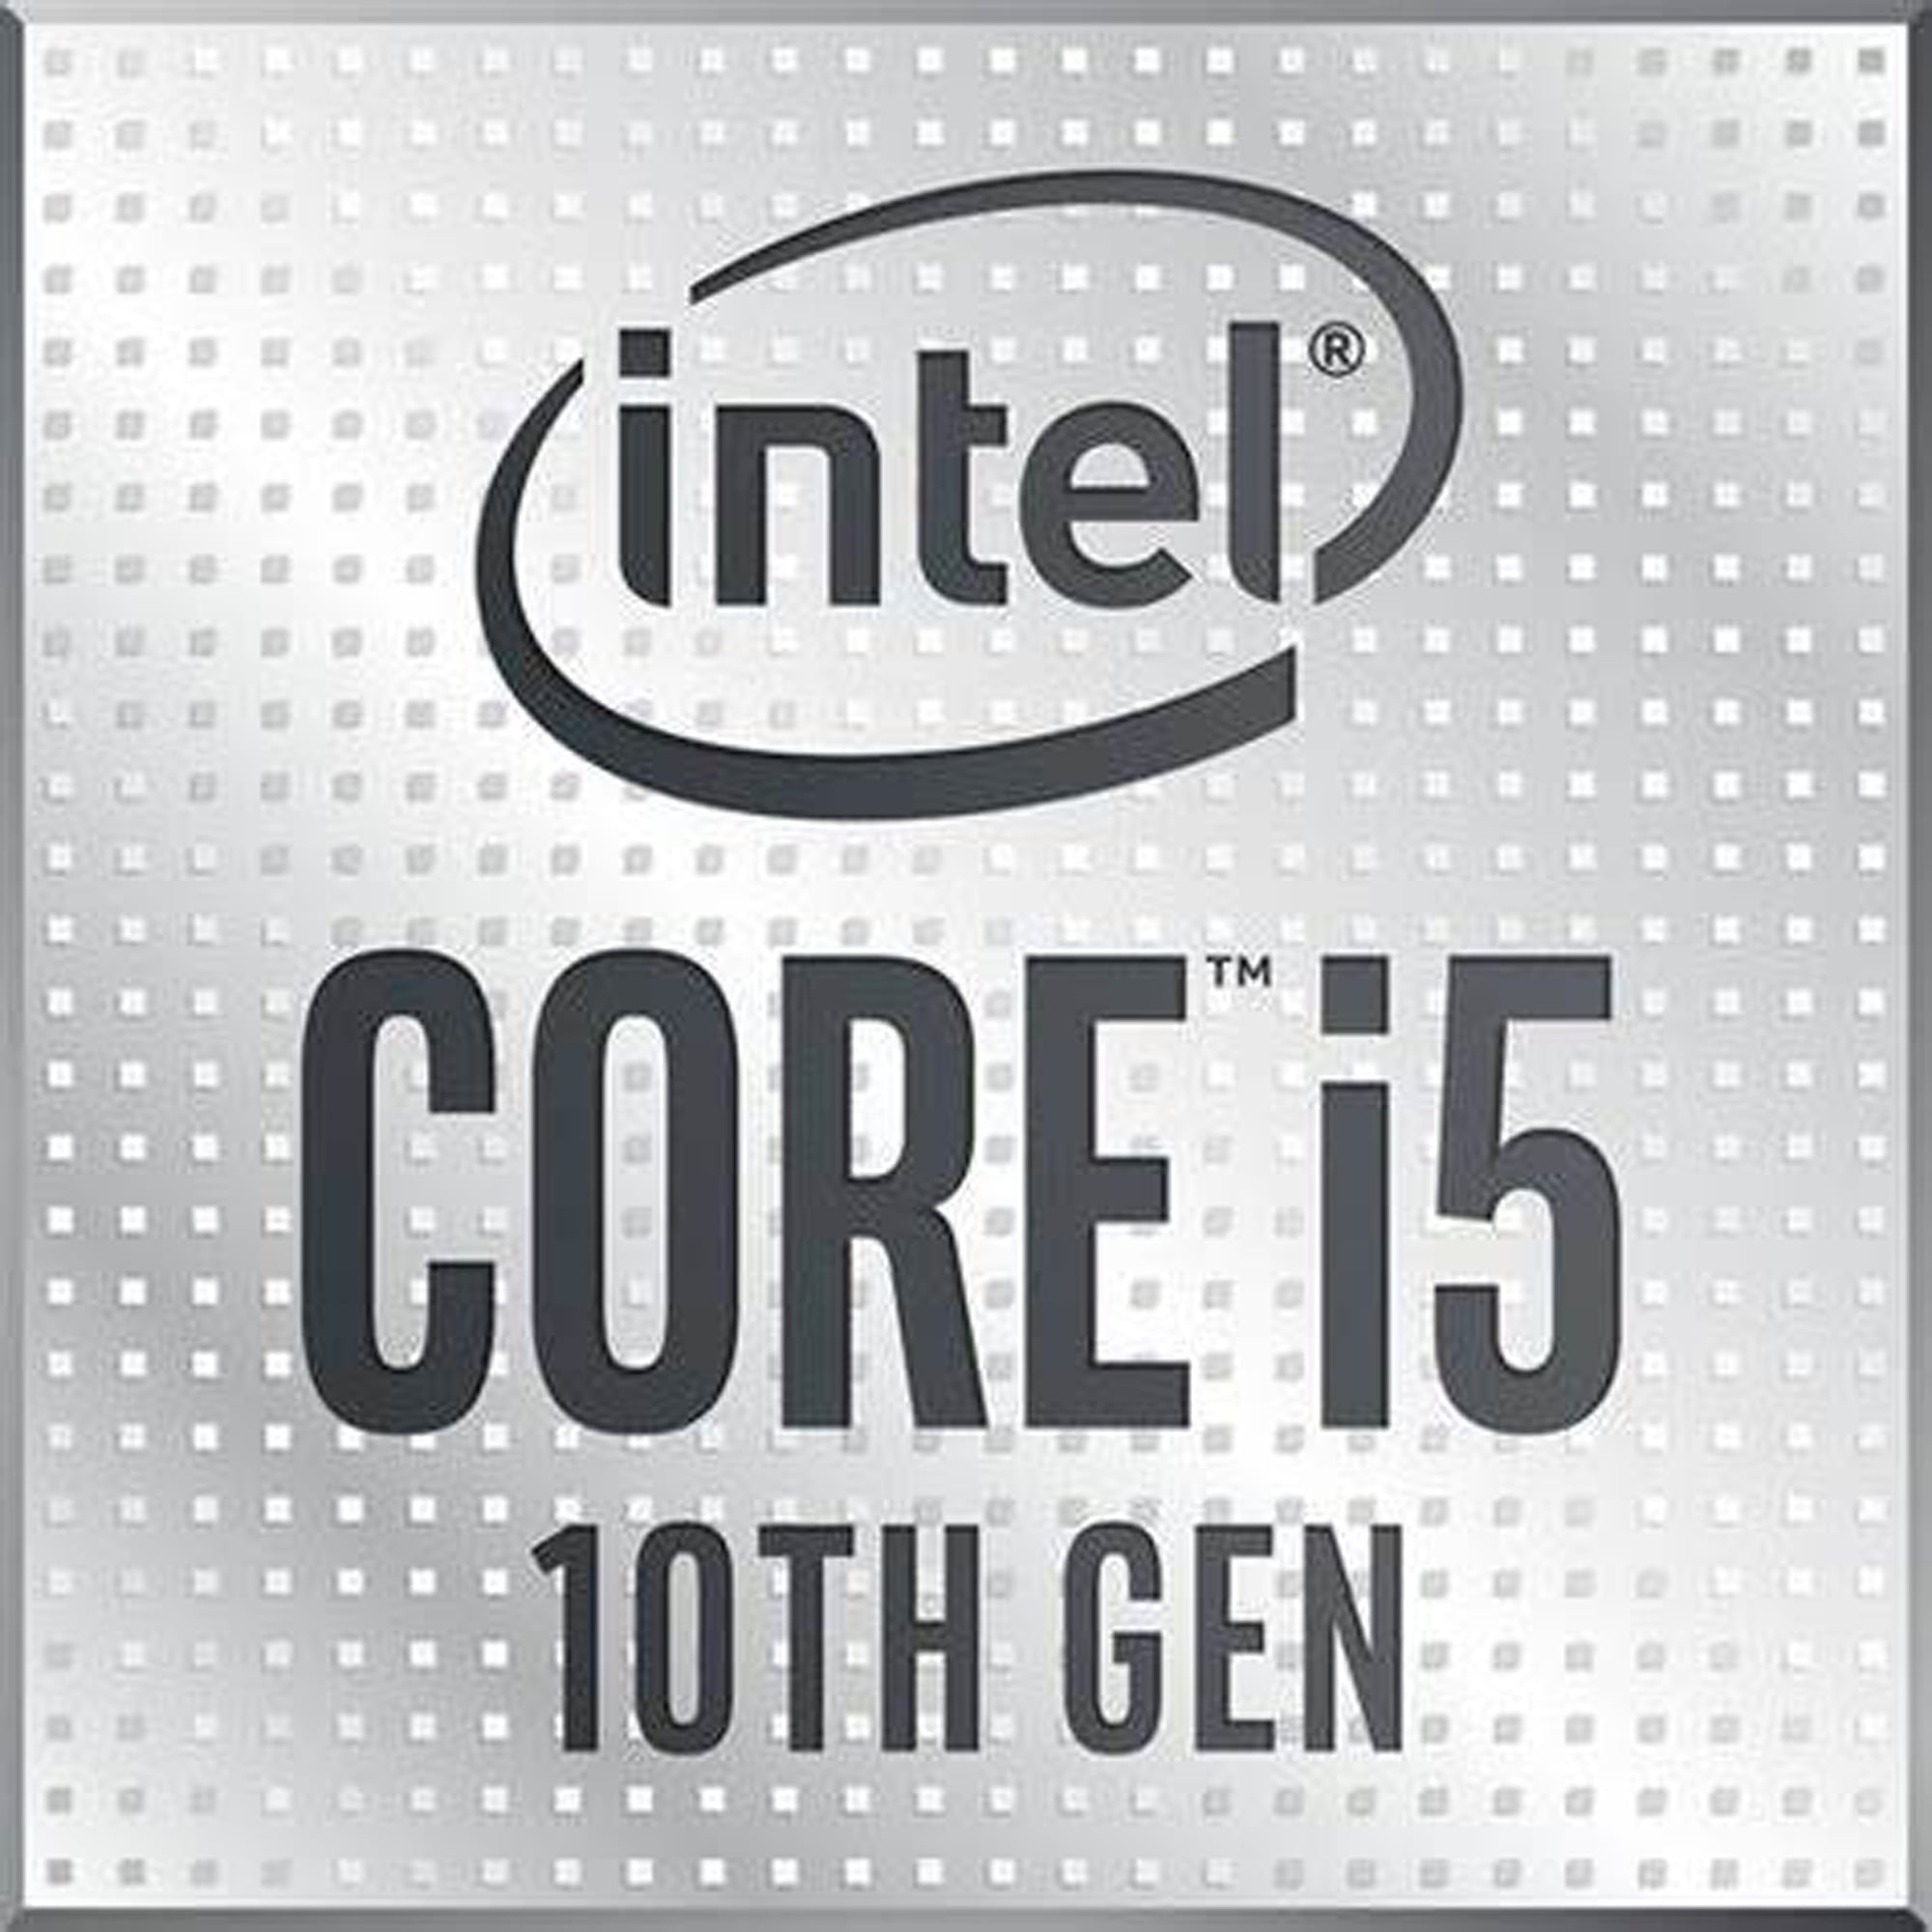 Intel Core i5-11600K Desktop Processor 6 Cores up to 4.9 GHz 